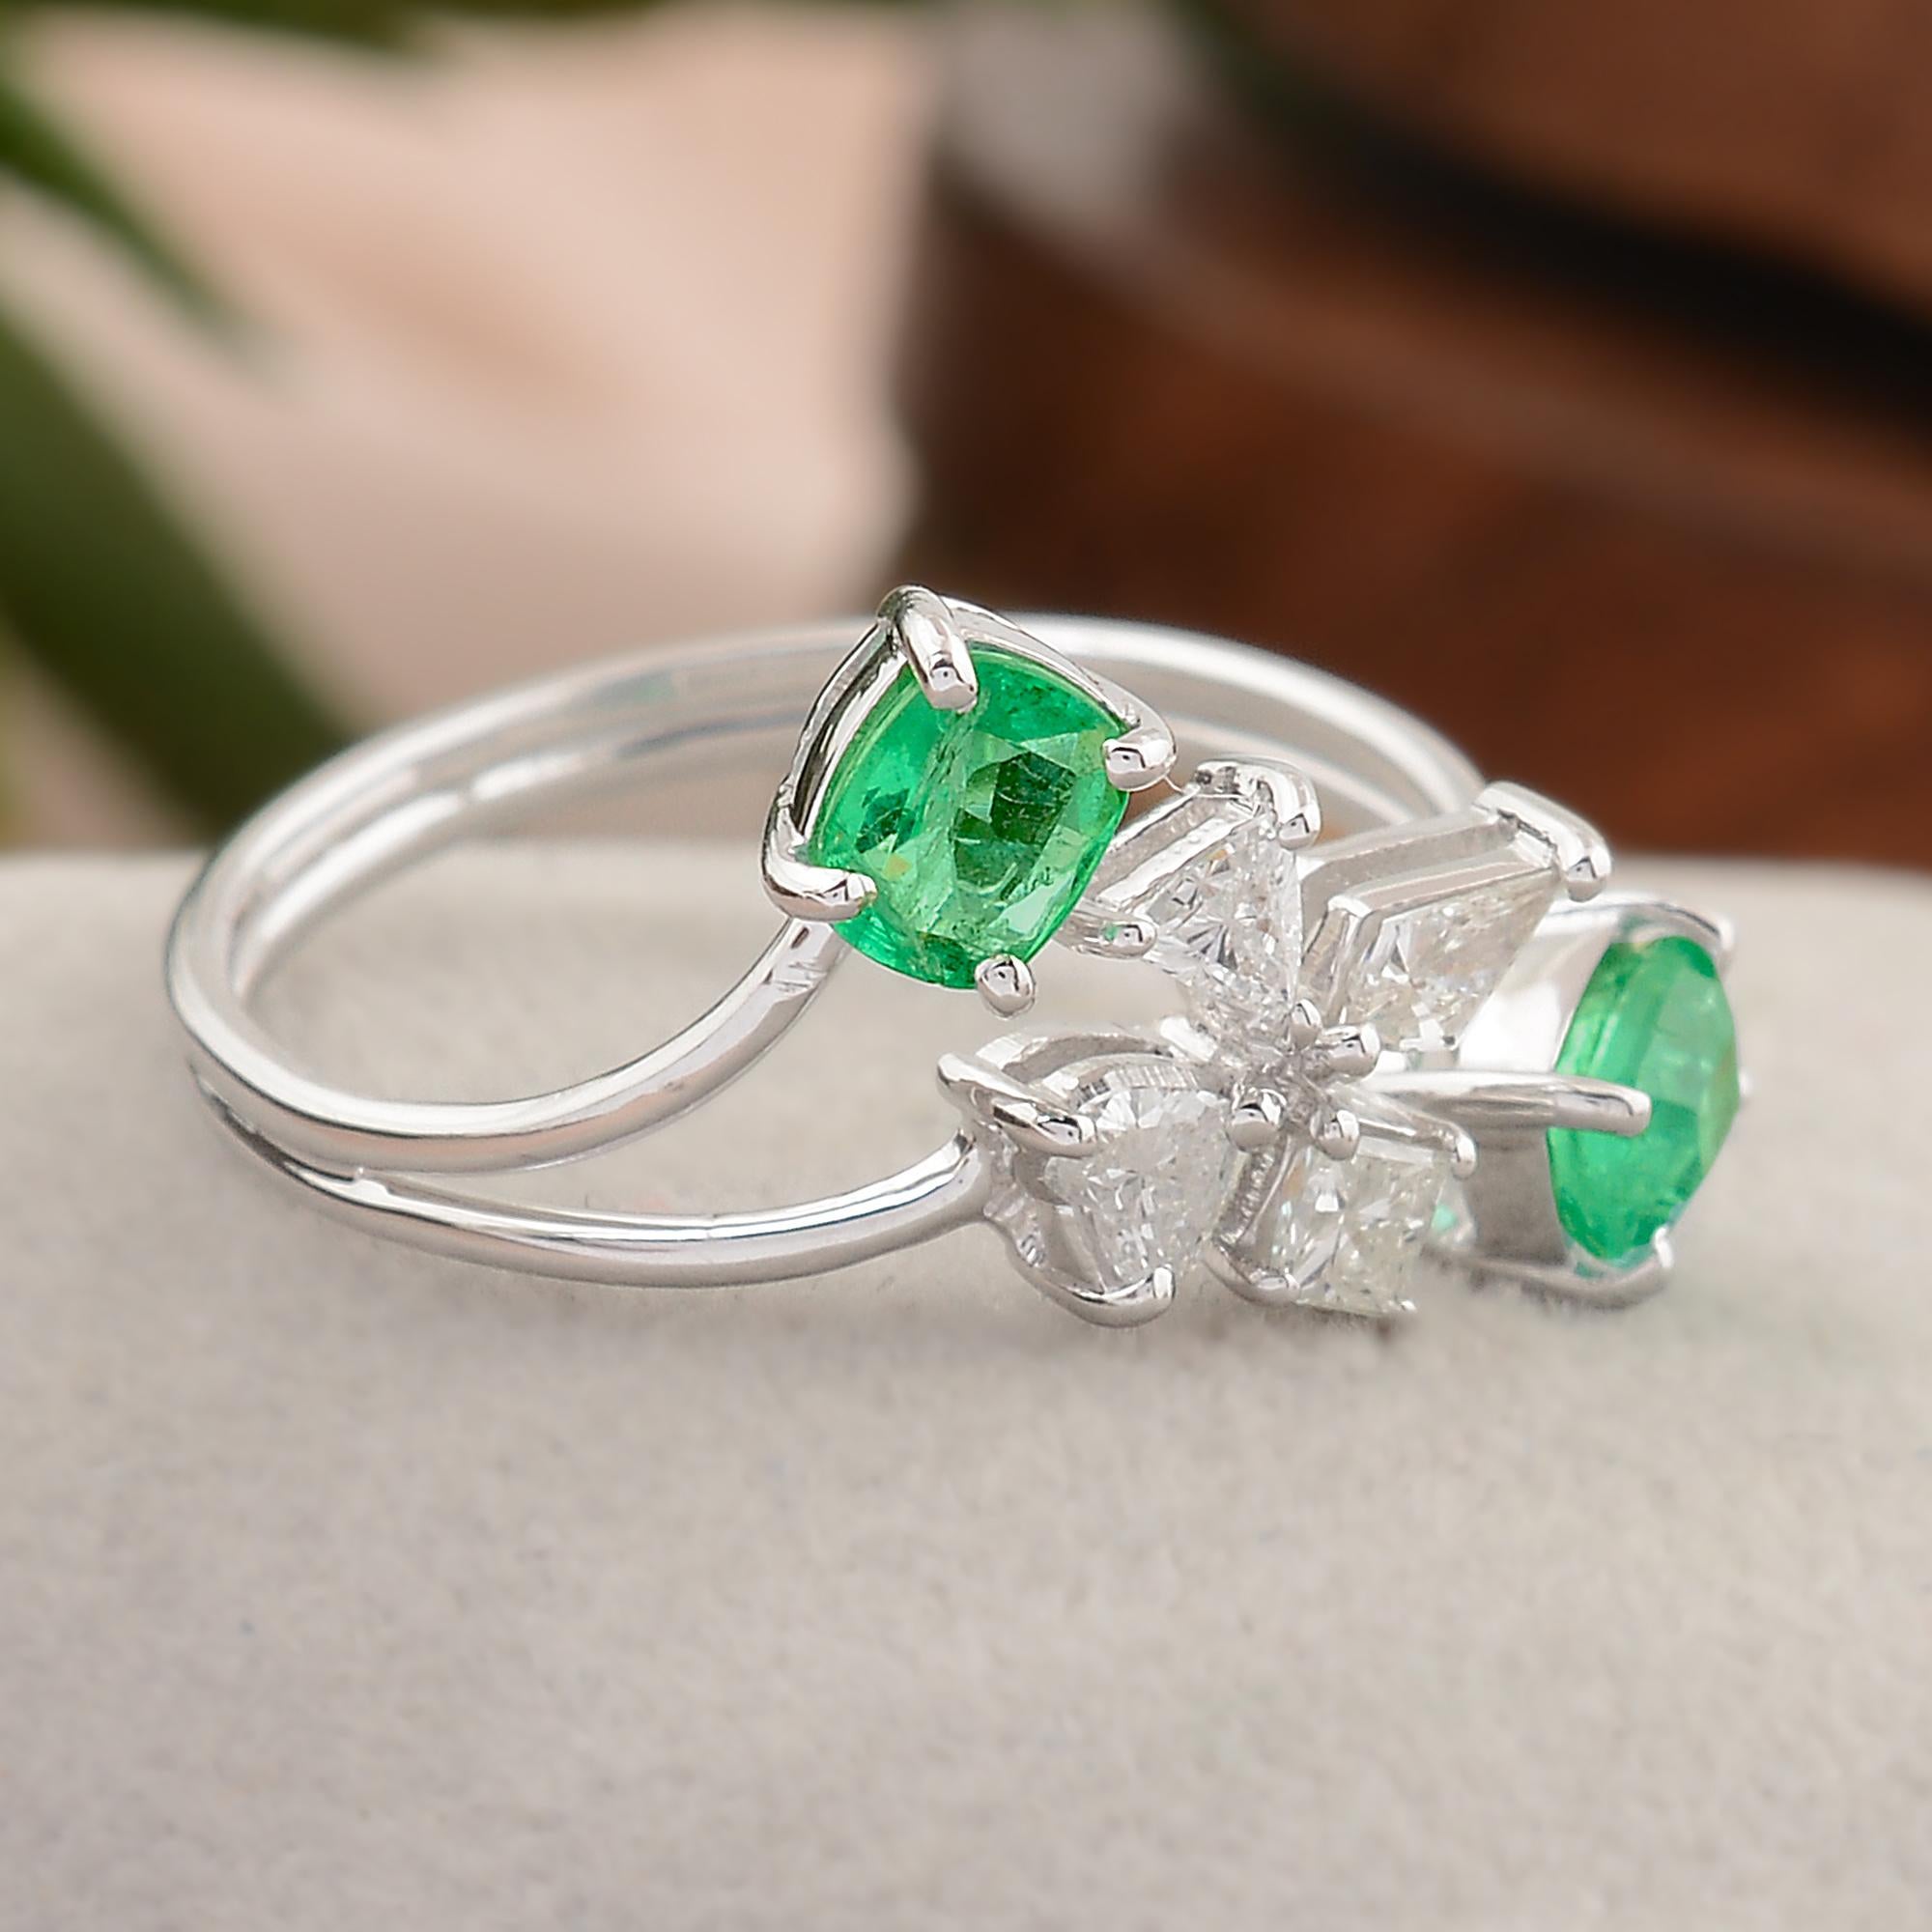 For Sale:  Natural Emerald Gemstone Diamond Designer Ring 18k White Gold Fine Jewelry 6